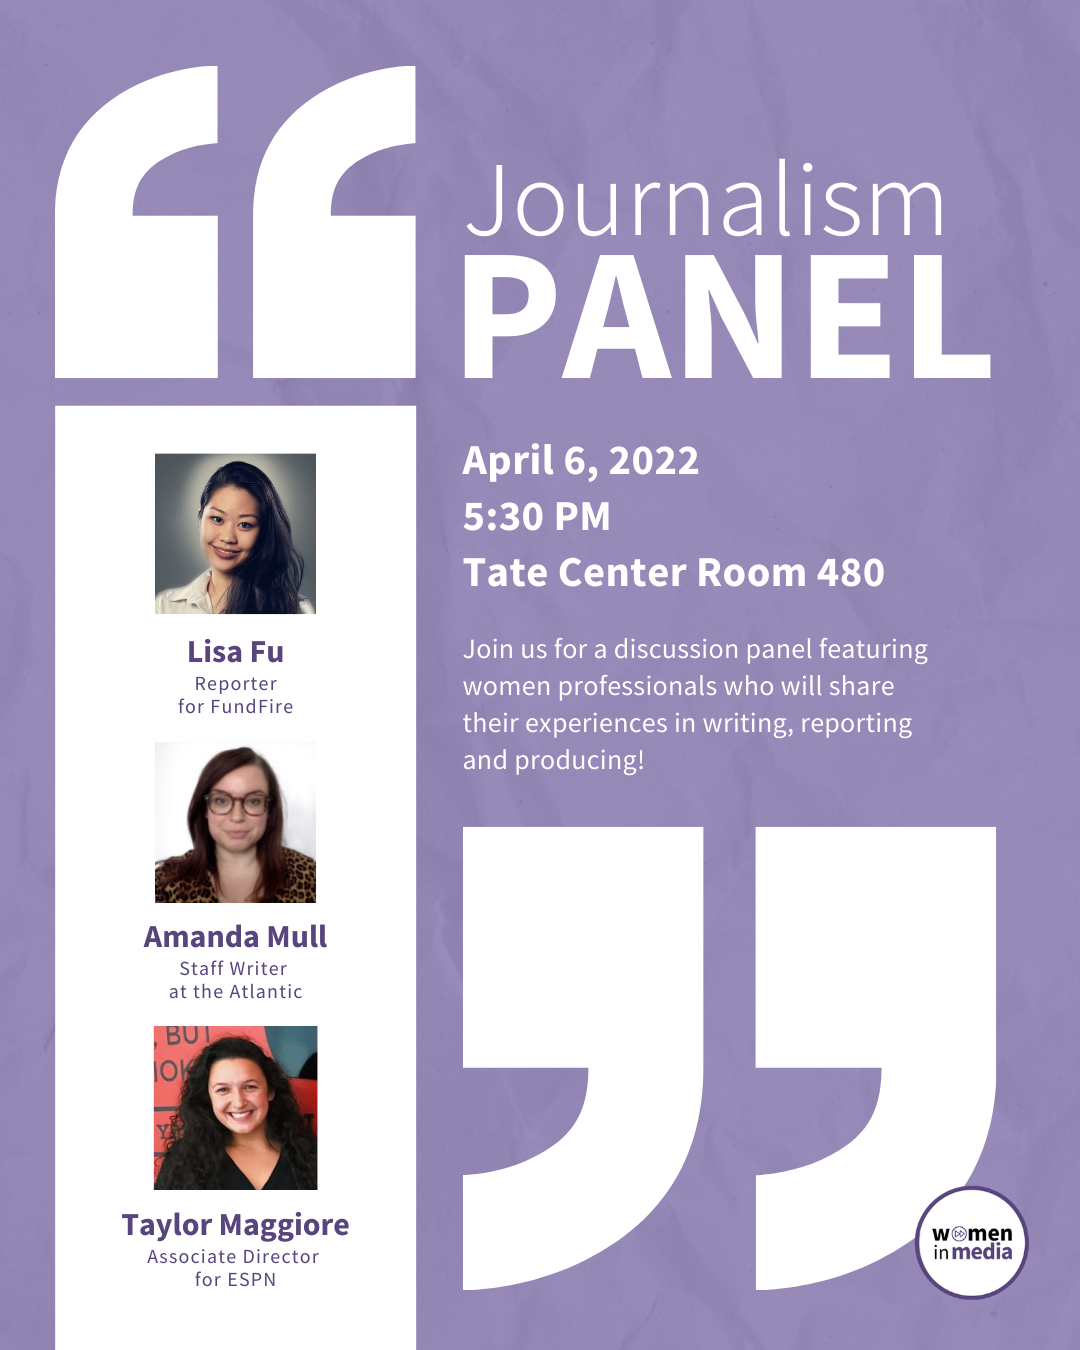 Flyer for Women in Media's Journalism Panel on April 6.